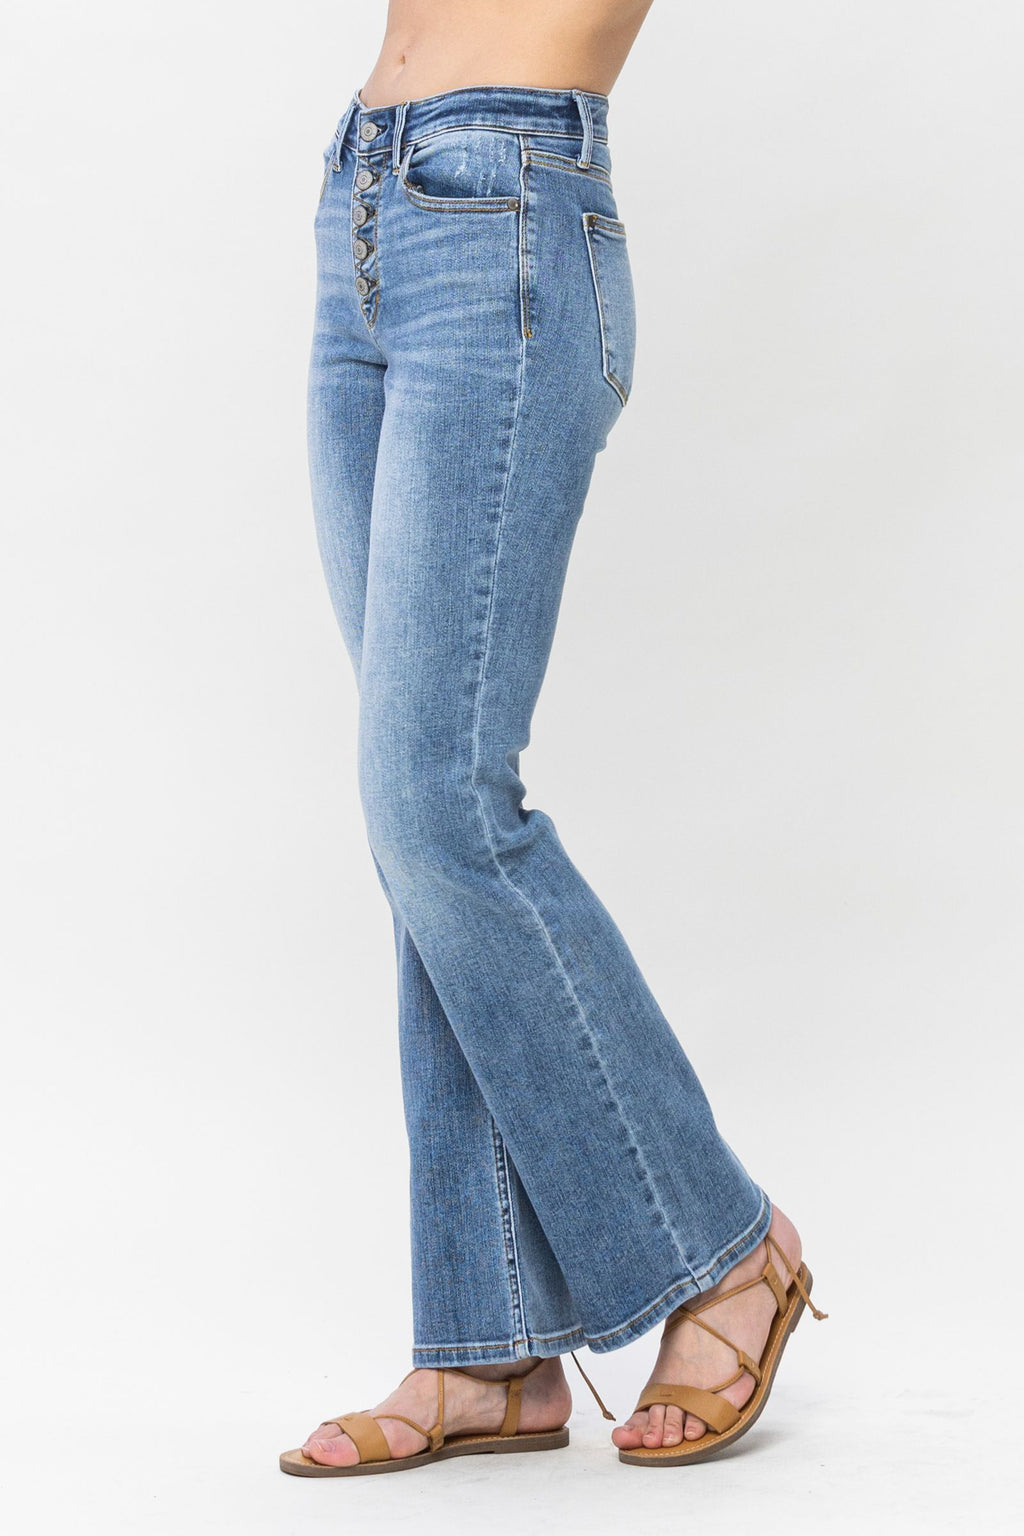 Judy Blue Jolie Mid Rise Vintage Jeans